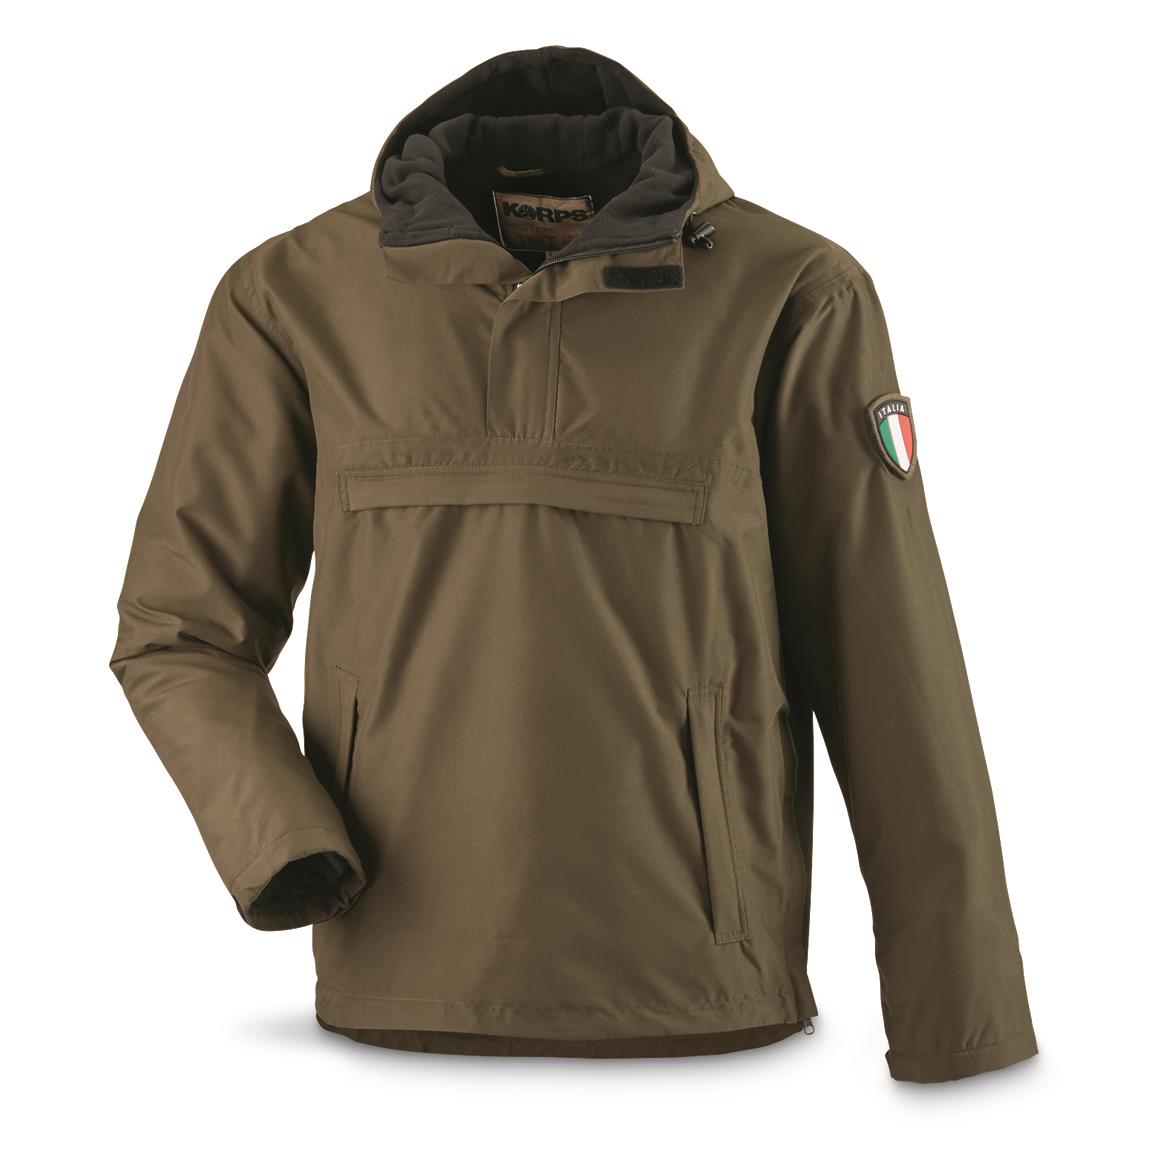 anorak jackets italian military surplus insulated anorak jacket, new, olive drab ZFBRCOW